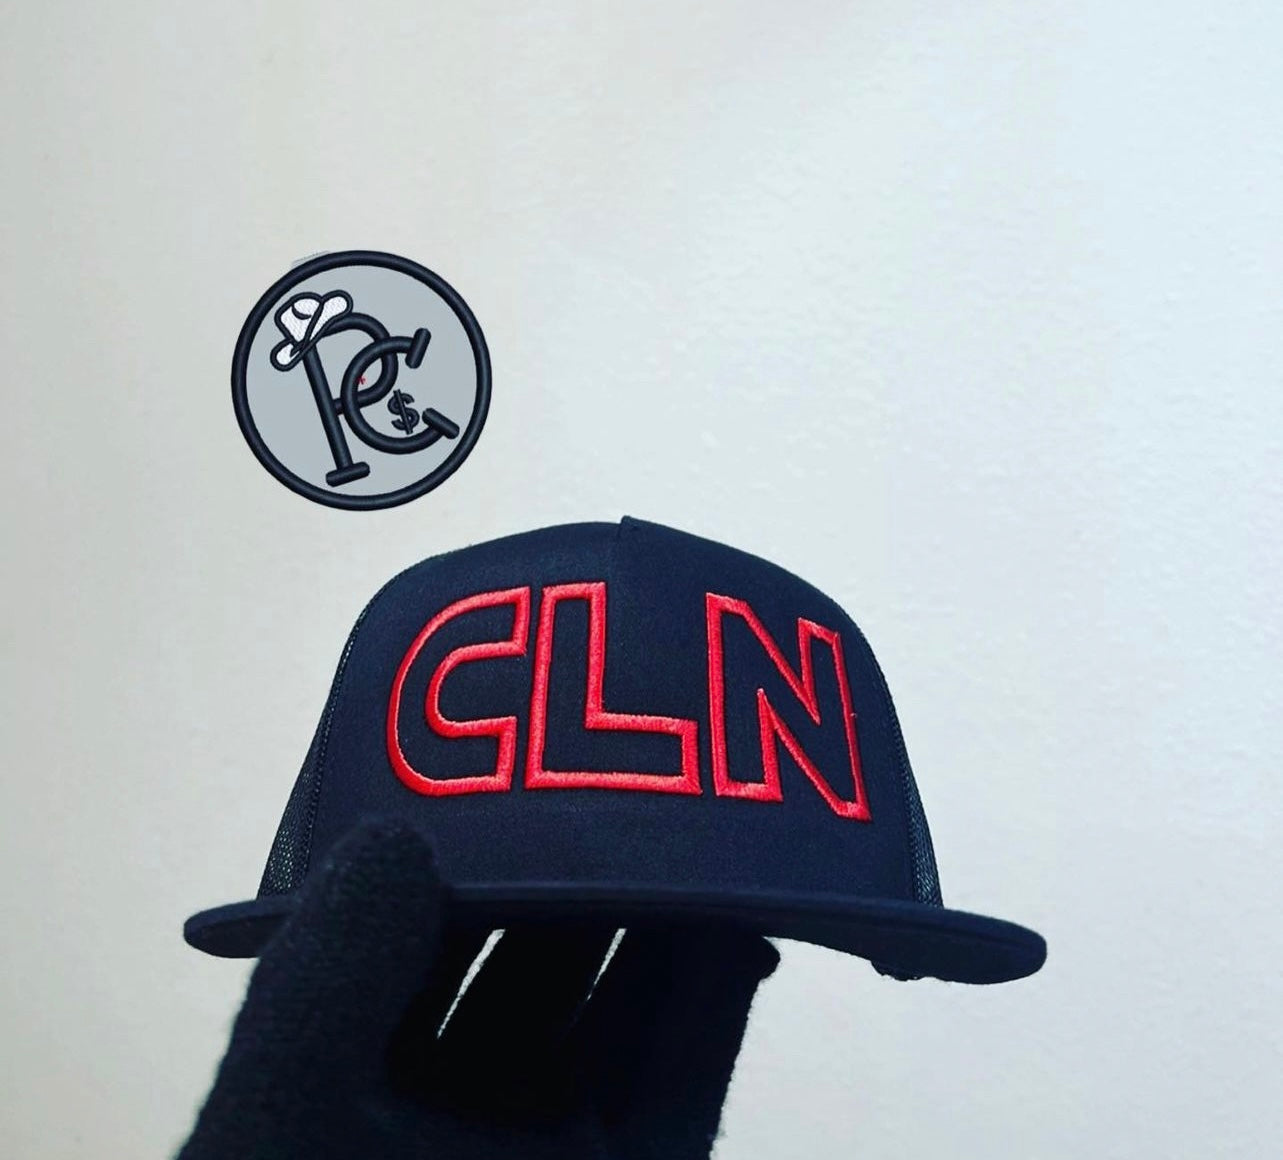 CLN - New trend alert! 😍 CLN Special Monogram-woven